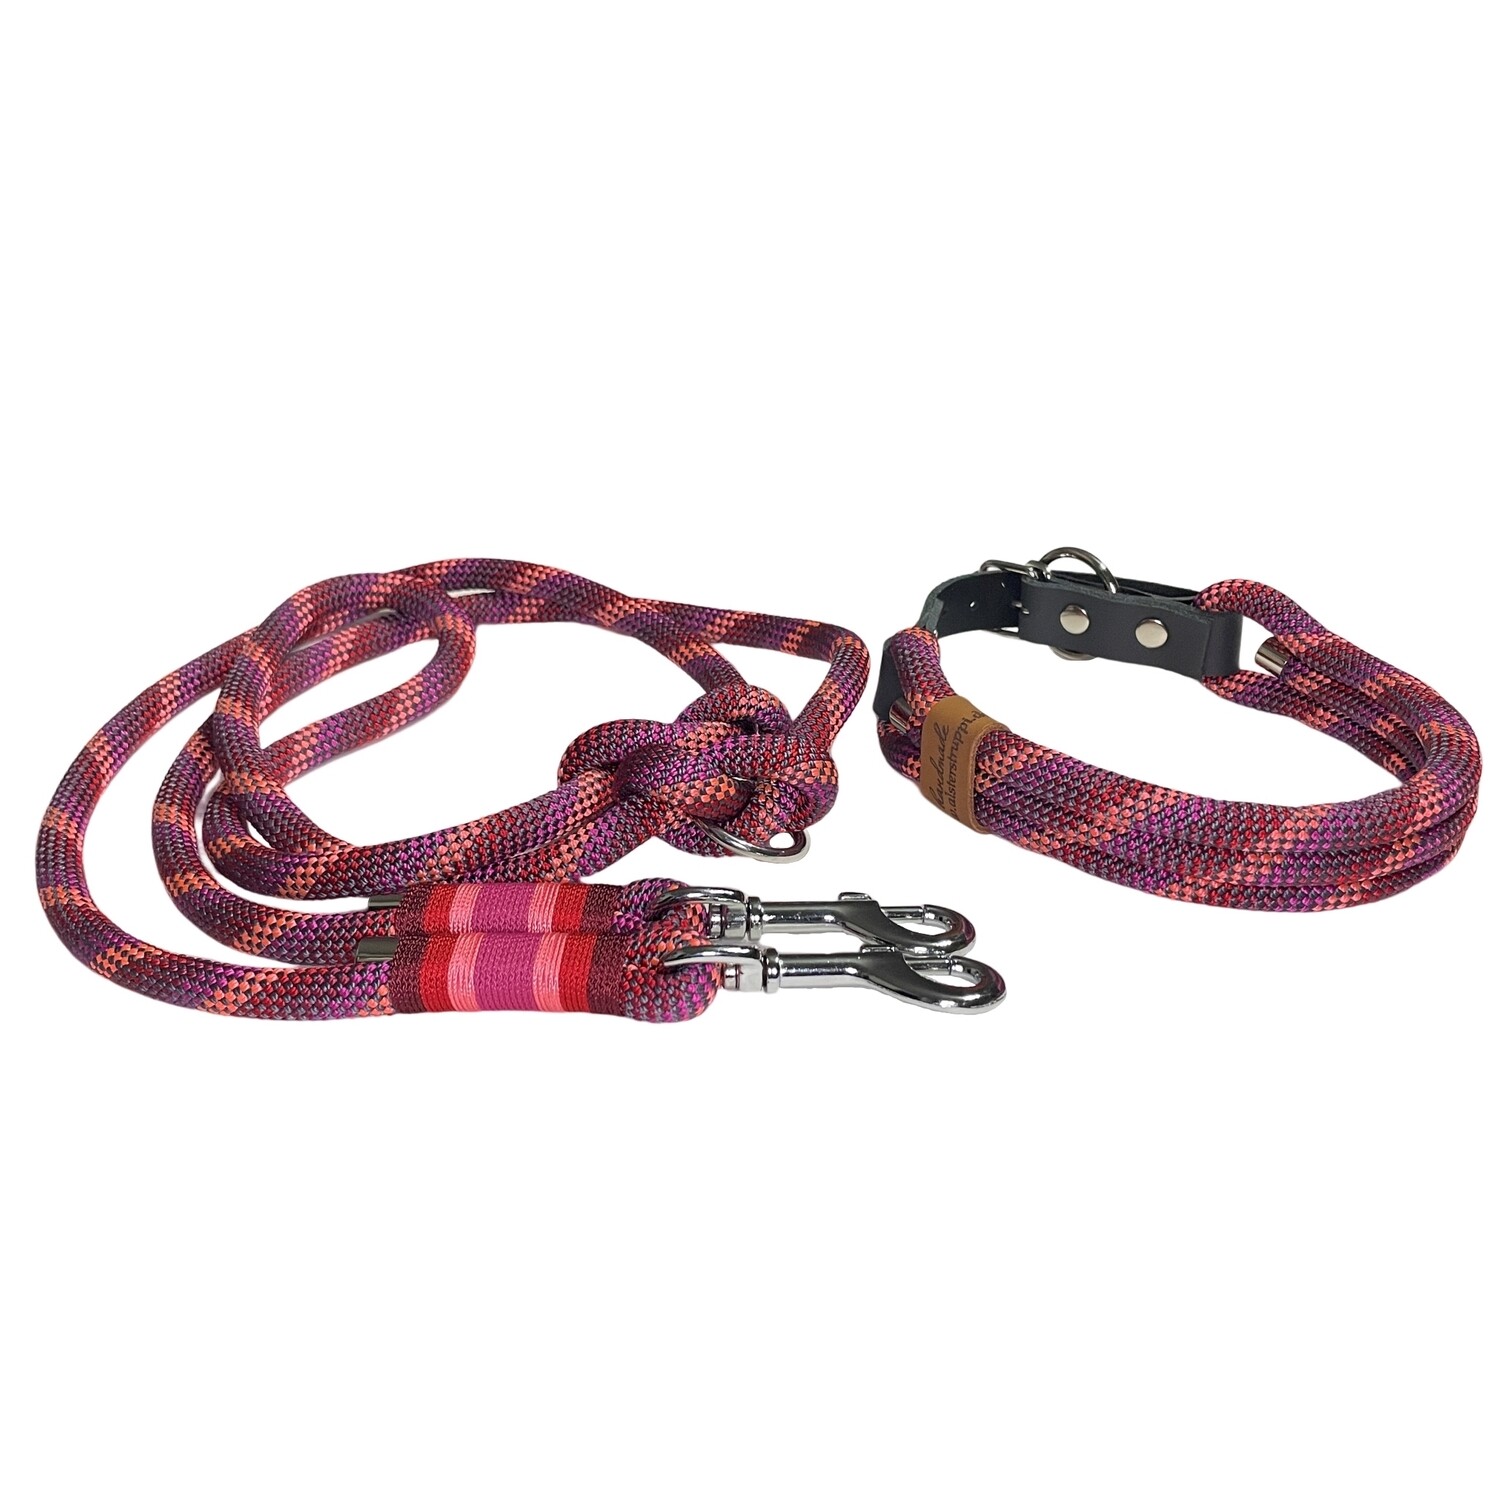 Leine Halsband Set verstellbar, dunkelgrau, koralle, rot, bordeaux, dunkelpink, ab 25 cm Halsumfang